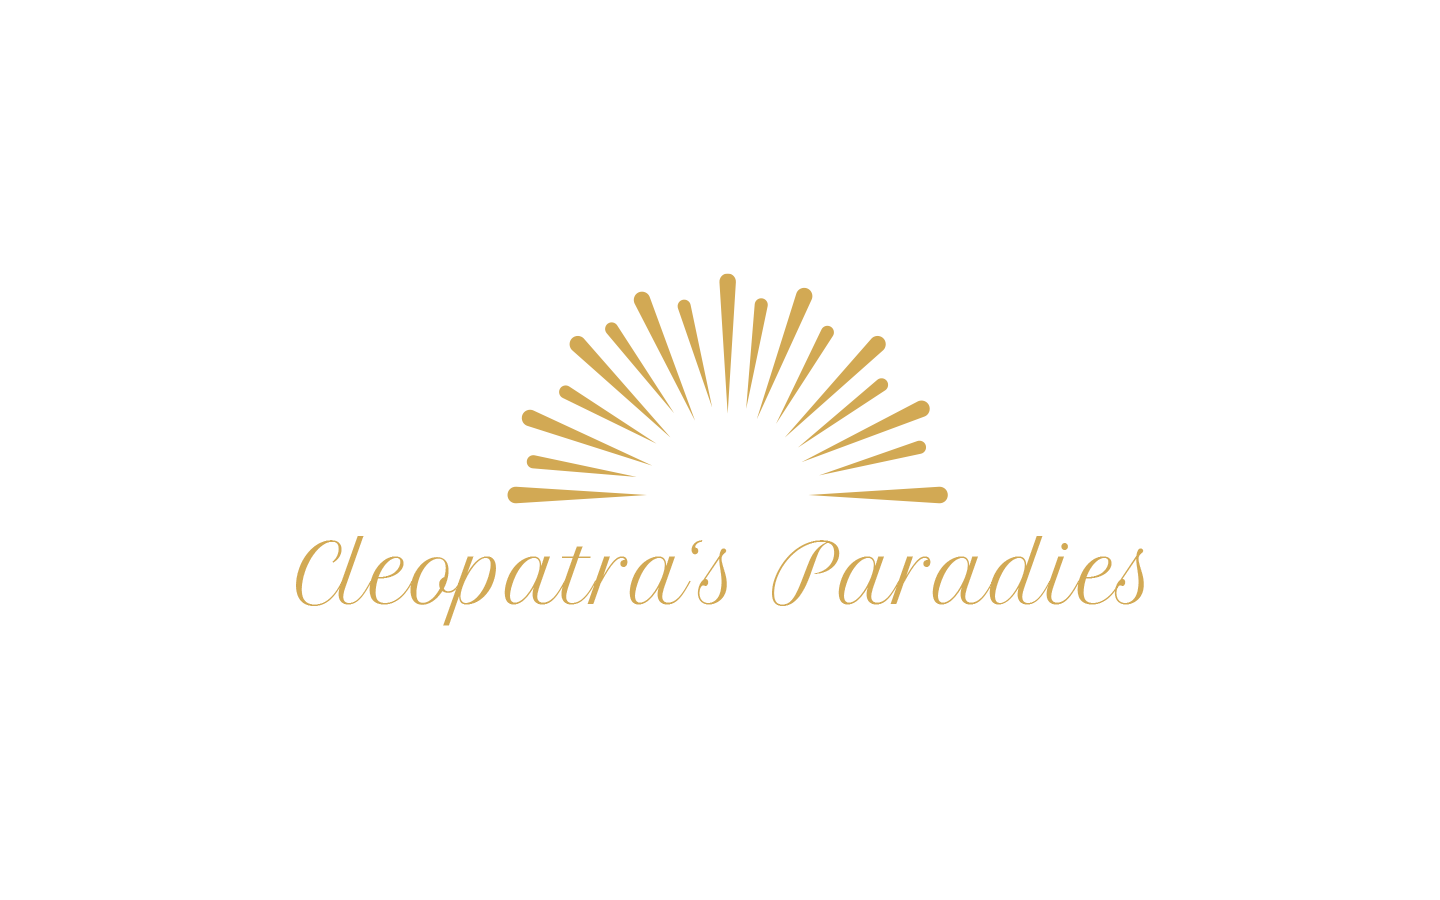 Cleopatra’s Paradies